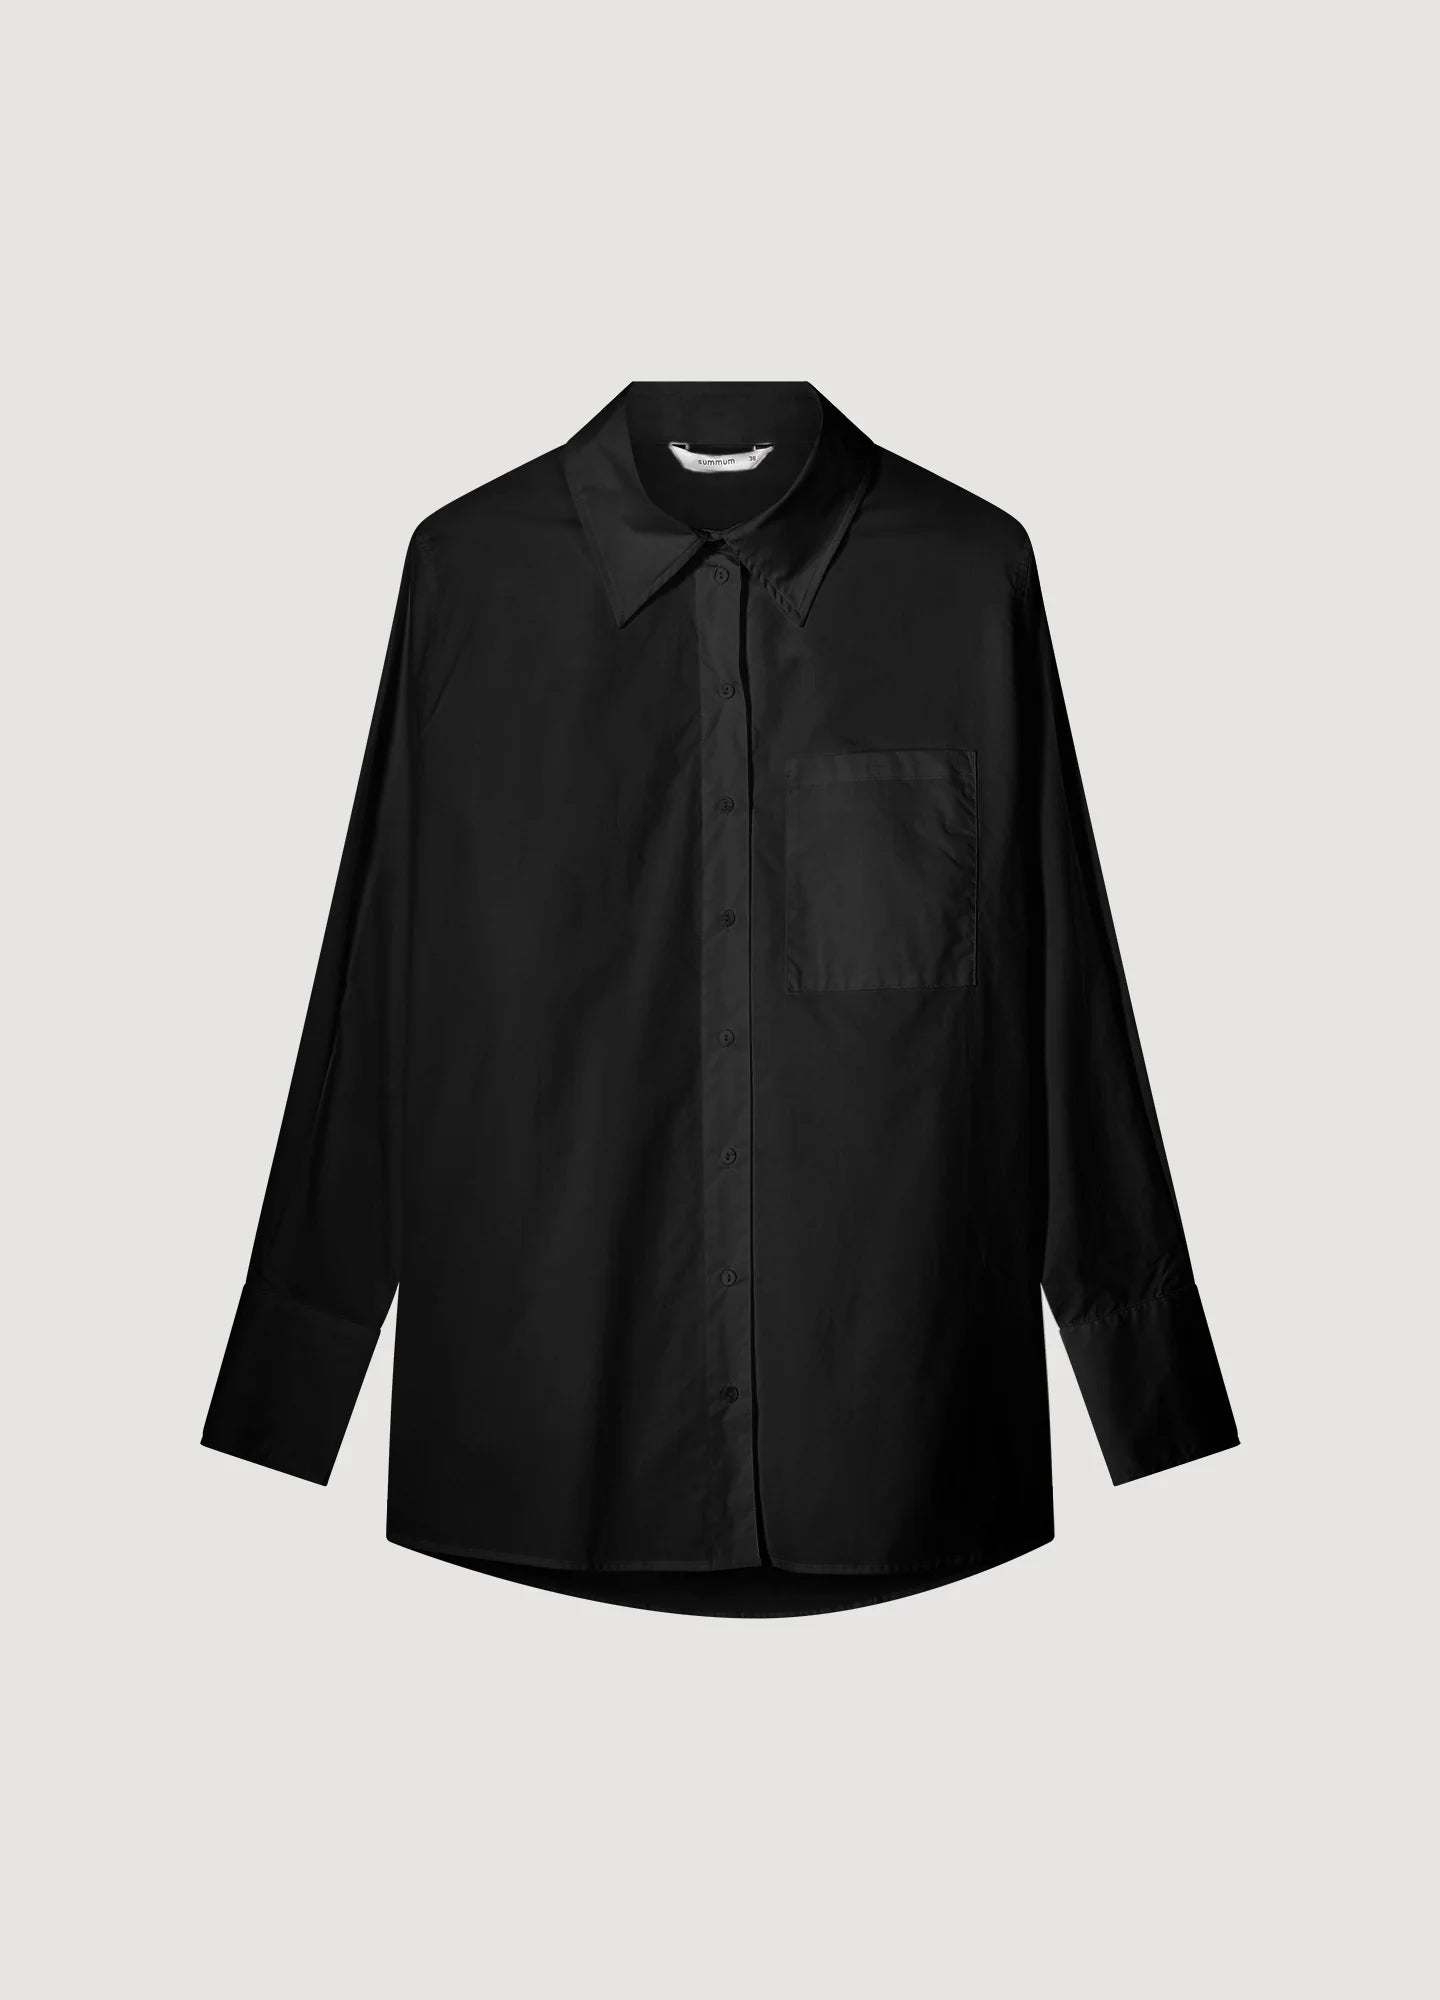 Summum Amsterdam 12119 black classic shirt